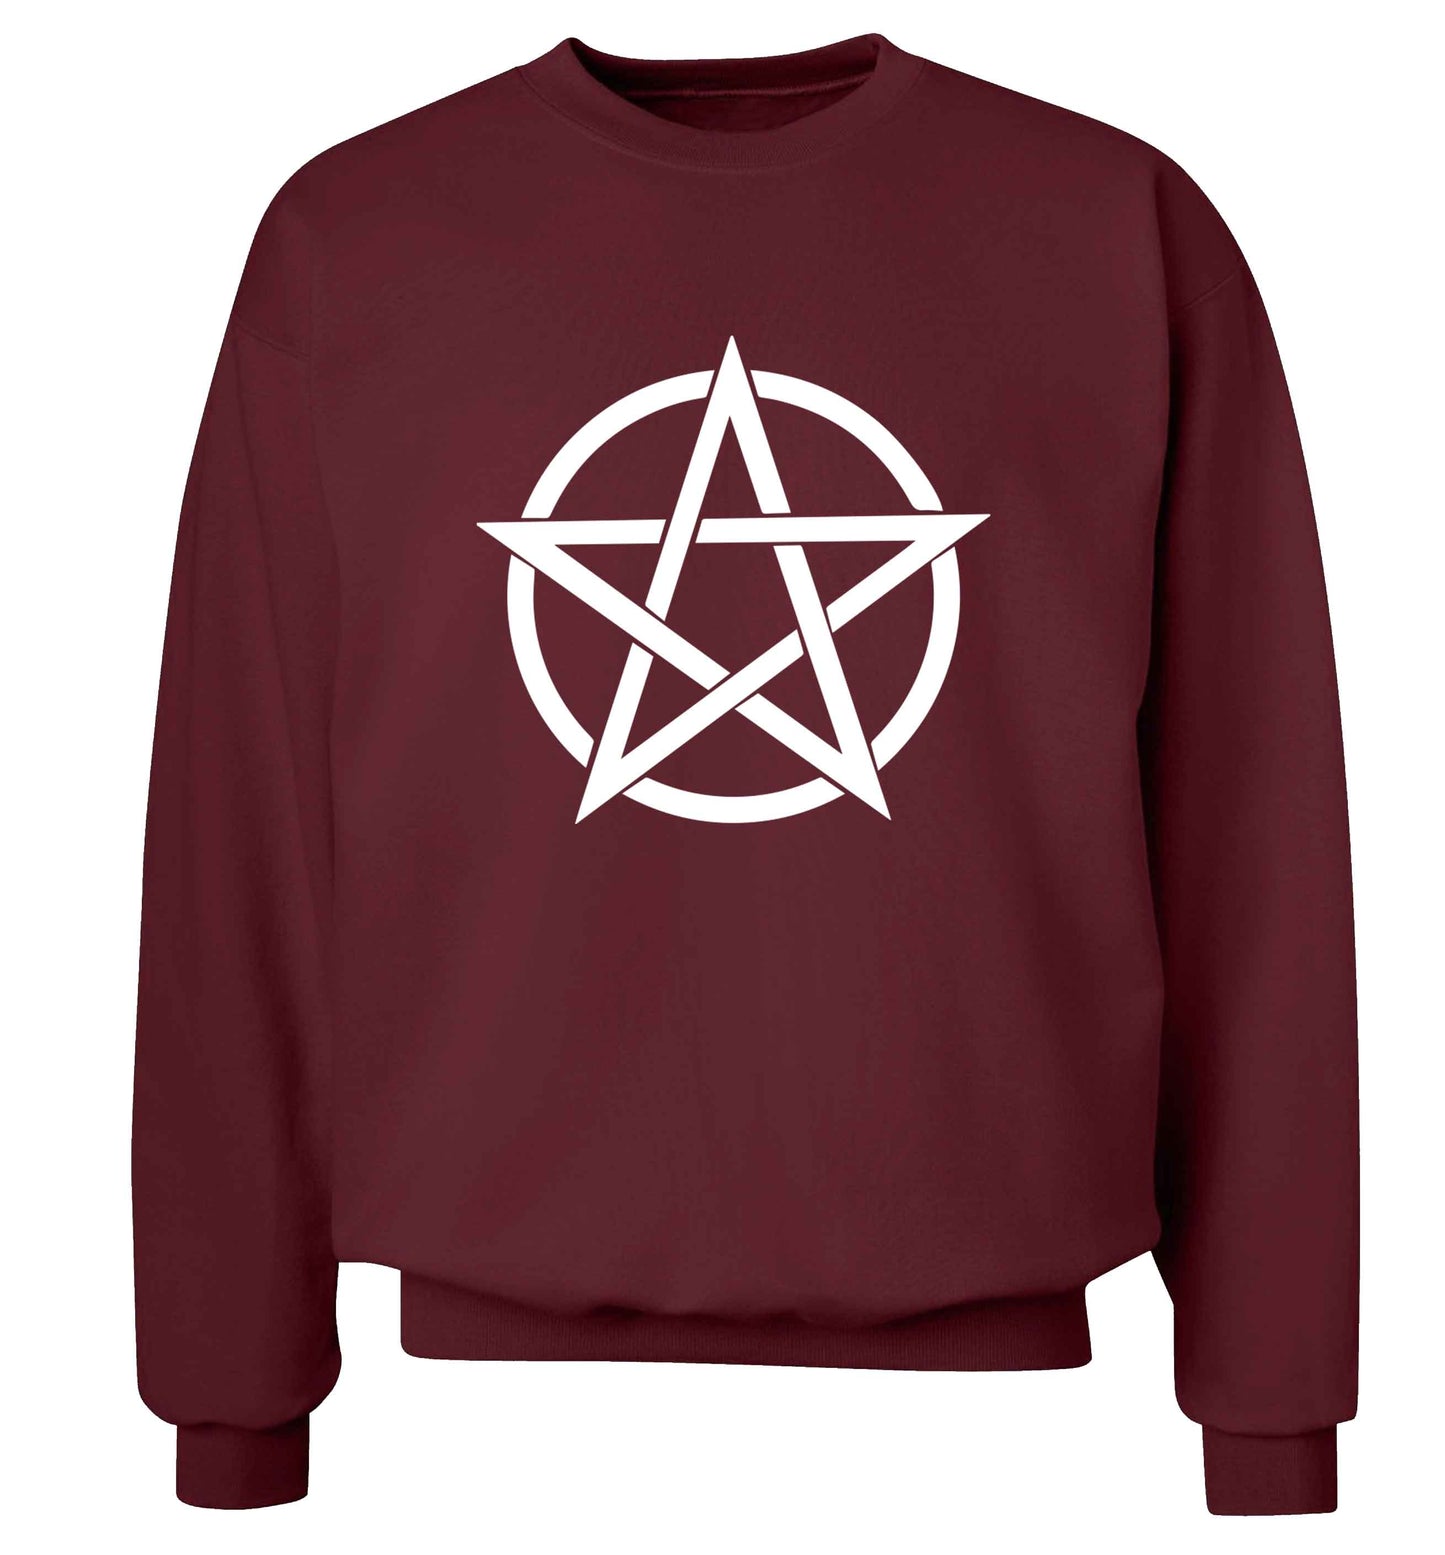 Pentagram symbol adult's unisex maroon sweater 2XL